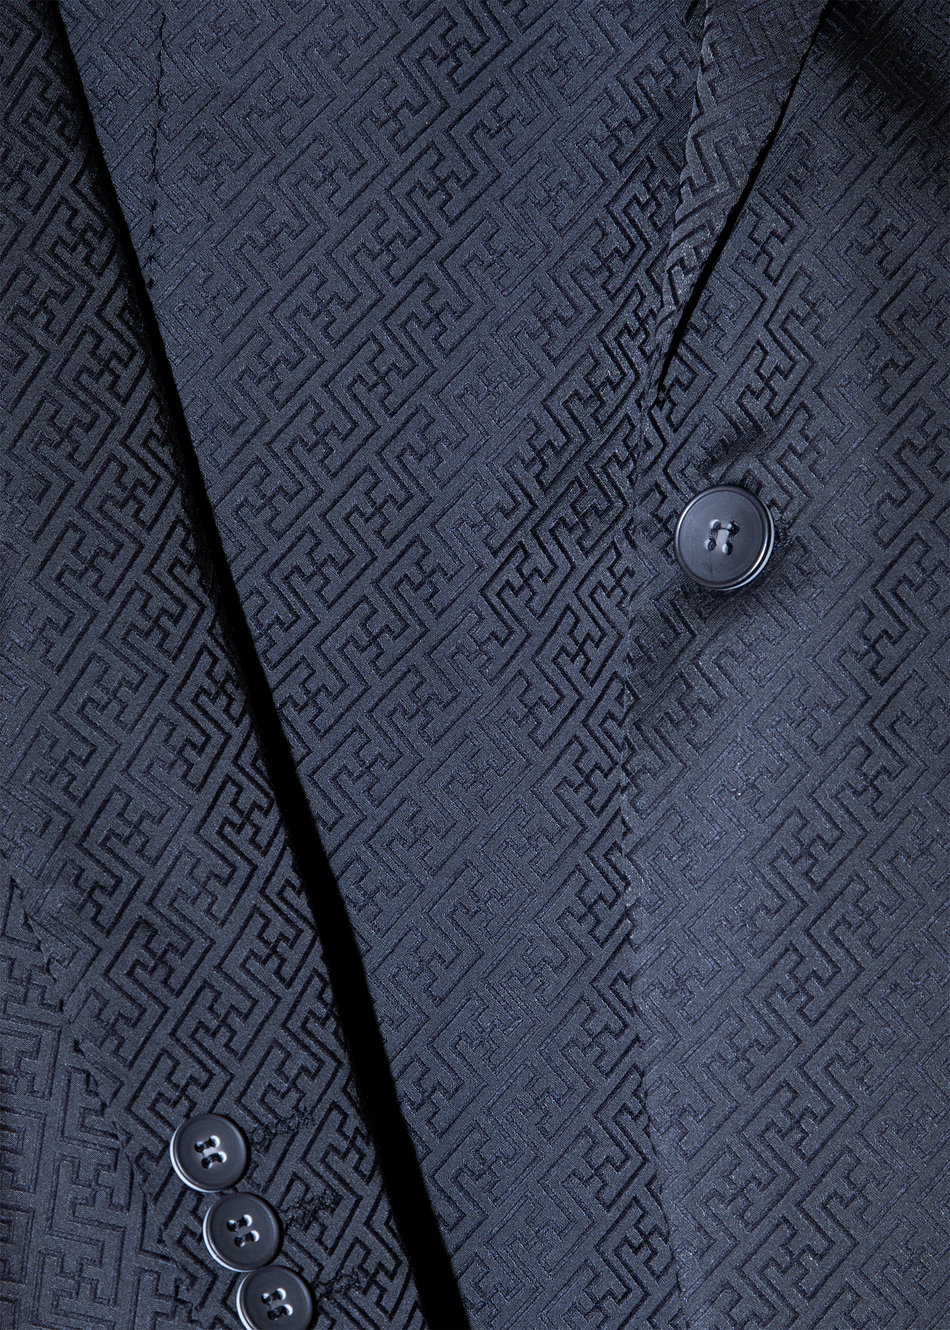 Maze MODA Black– Evening Texture Blazer BESPOKE Microprint